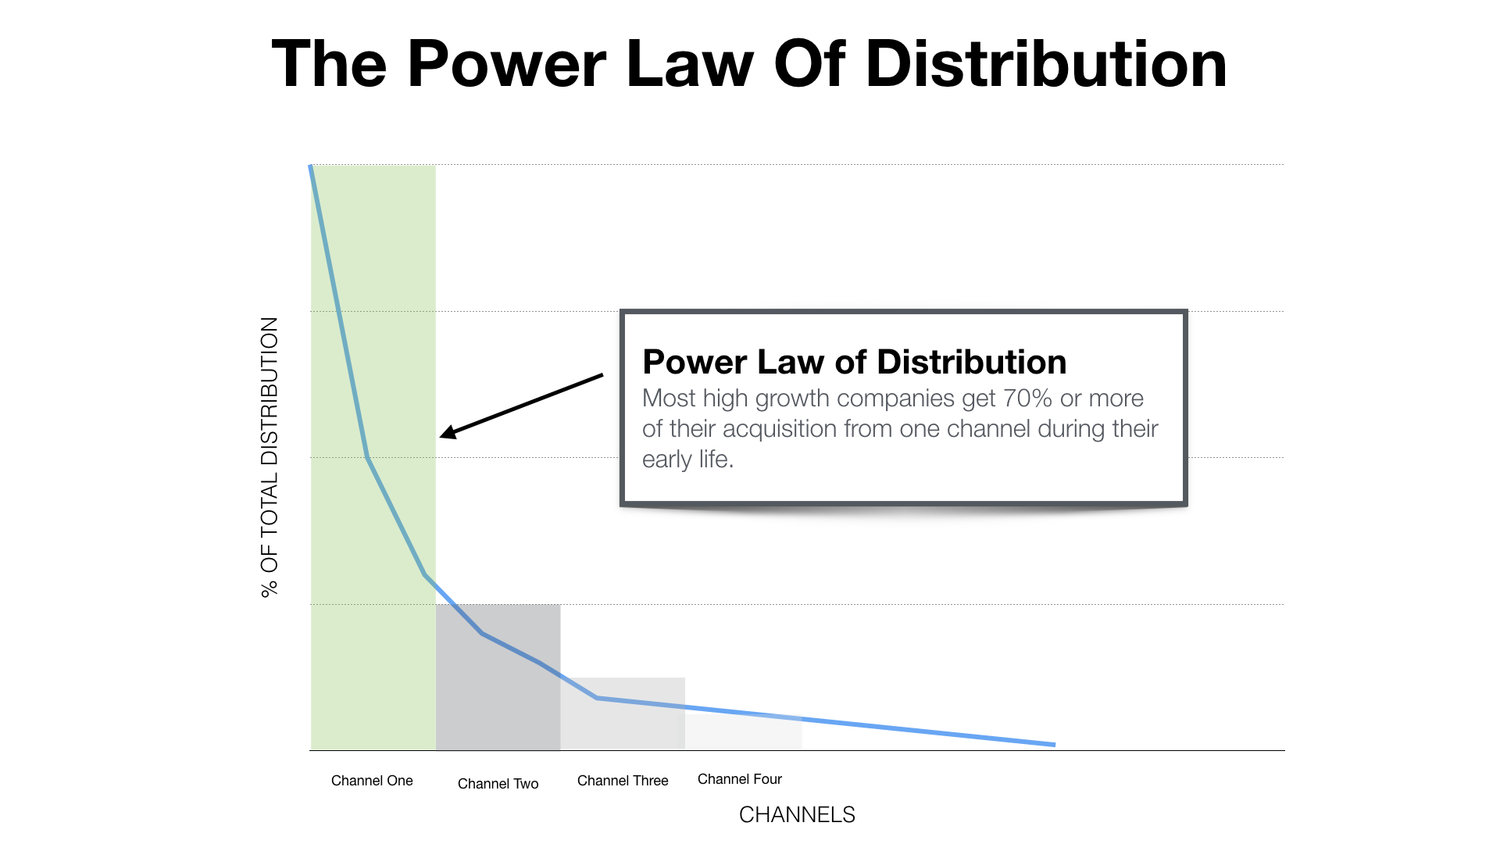 Distribution follows a power law